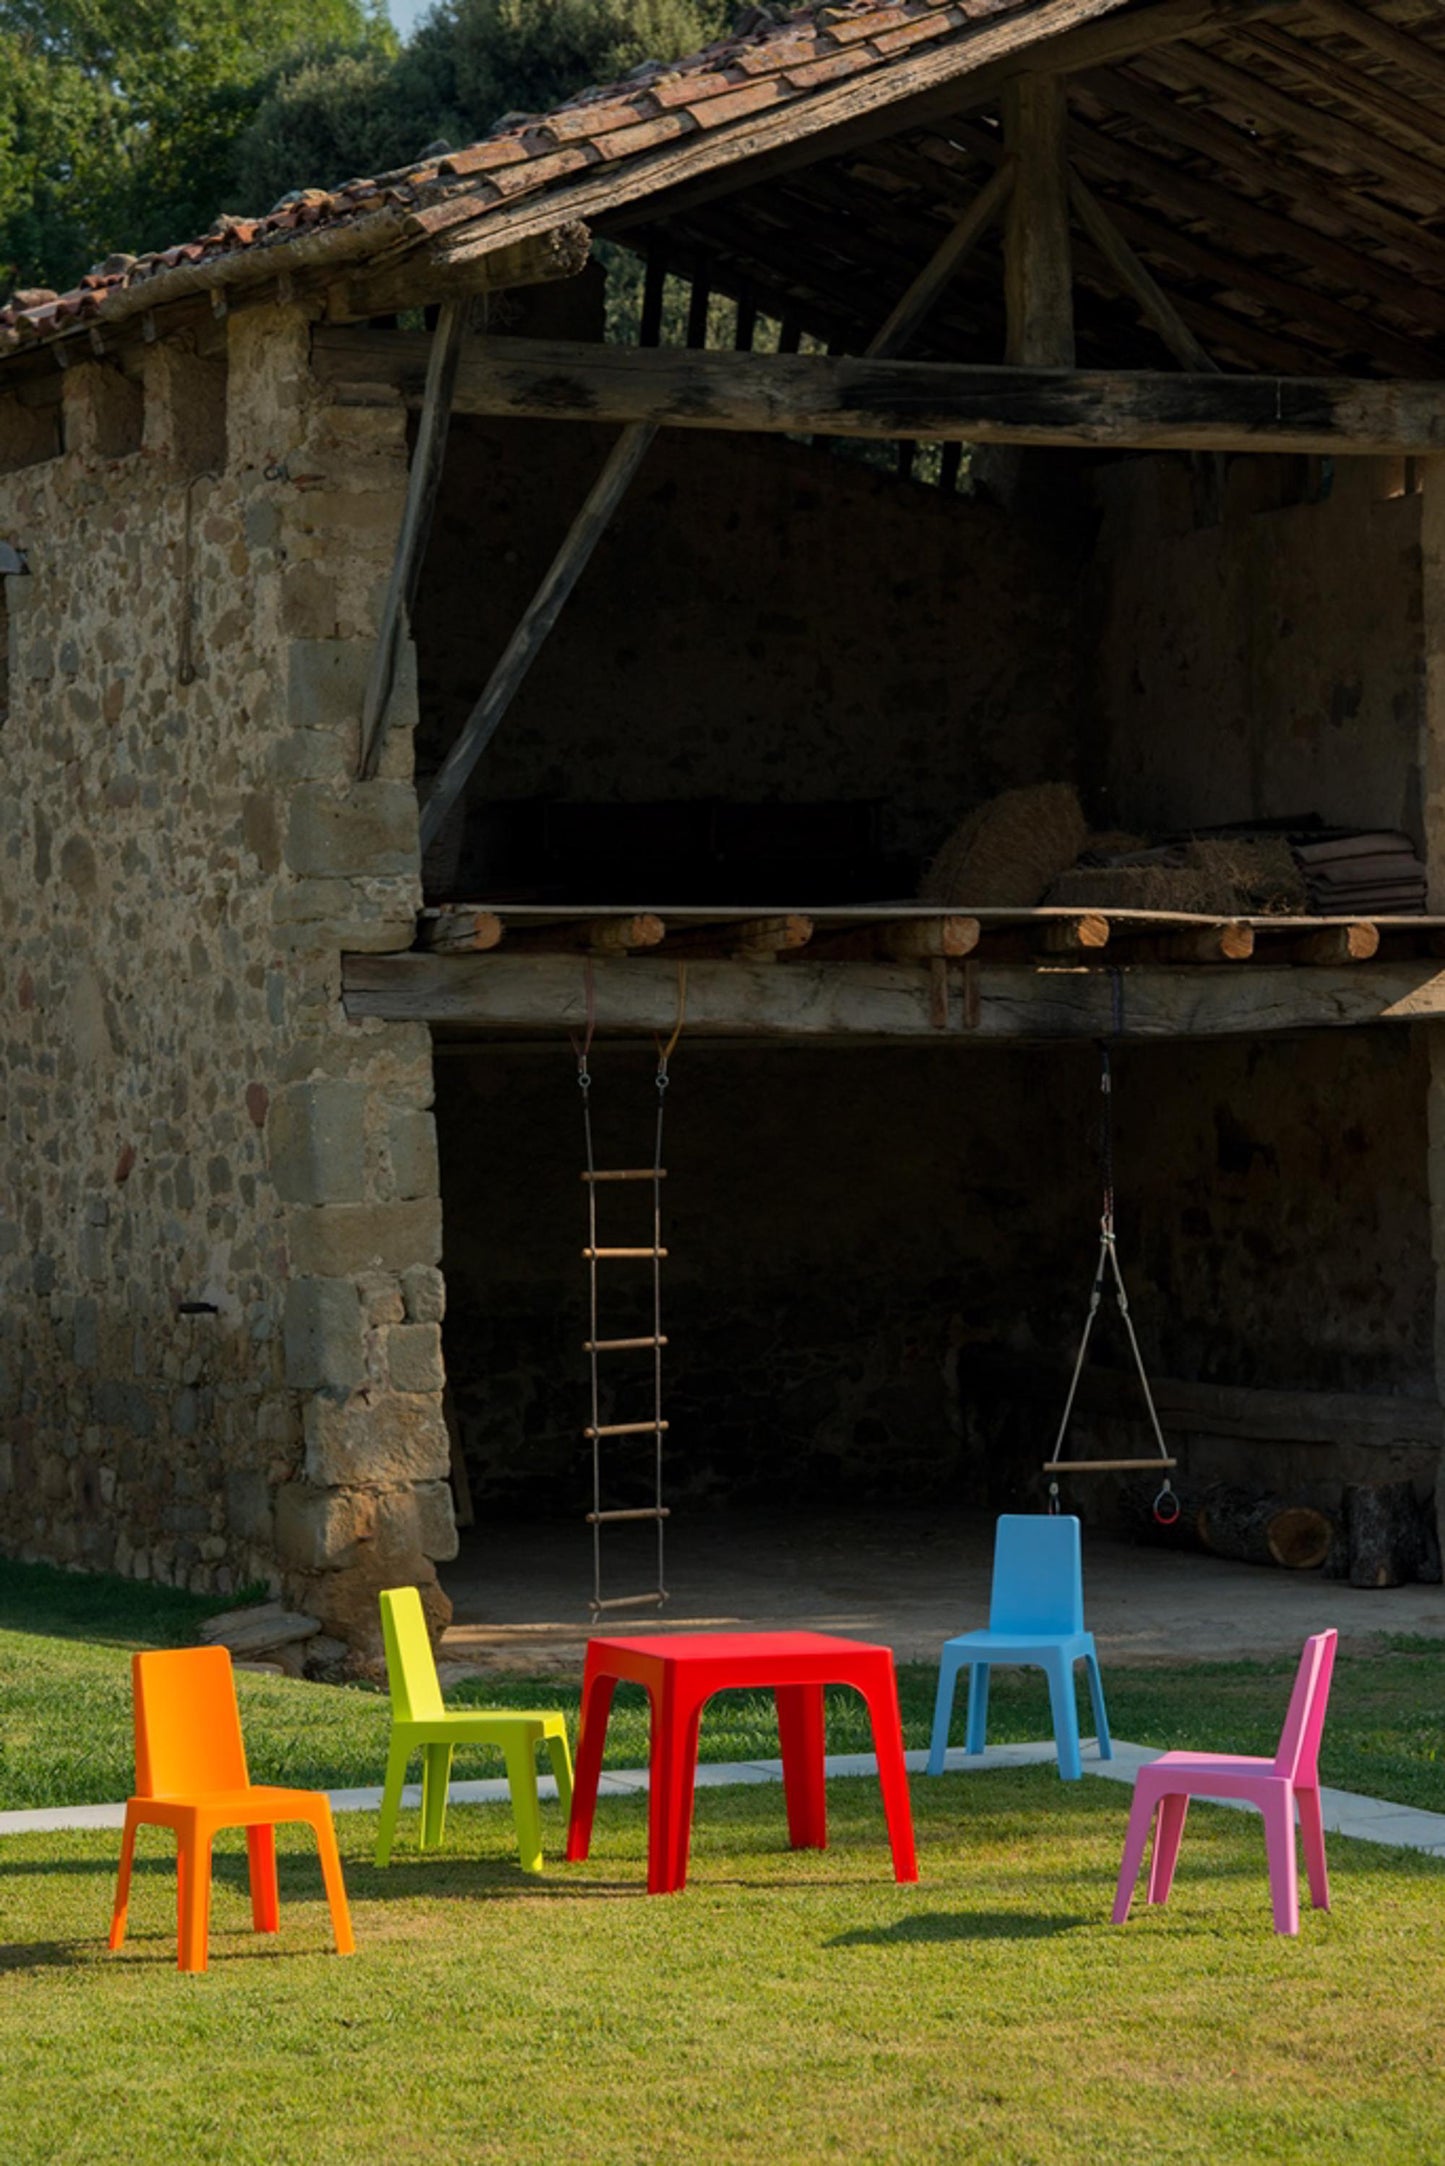 Garbar julieta set 4+1 infantil silla-mesa interior, exterior azul cielo/rosa/rojo/naranja/verde lima